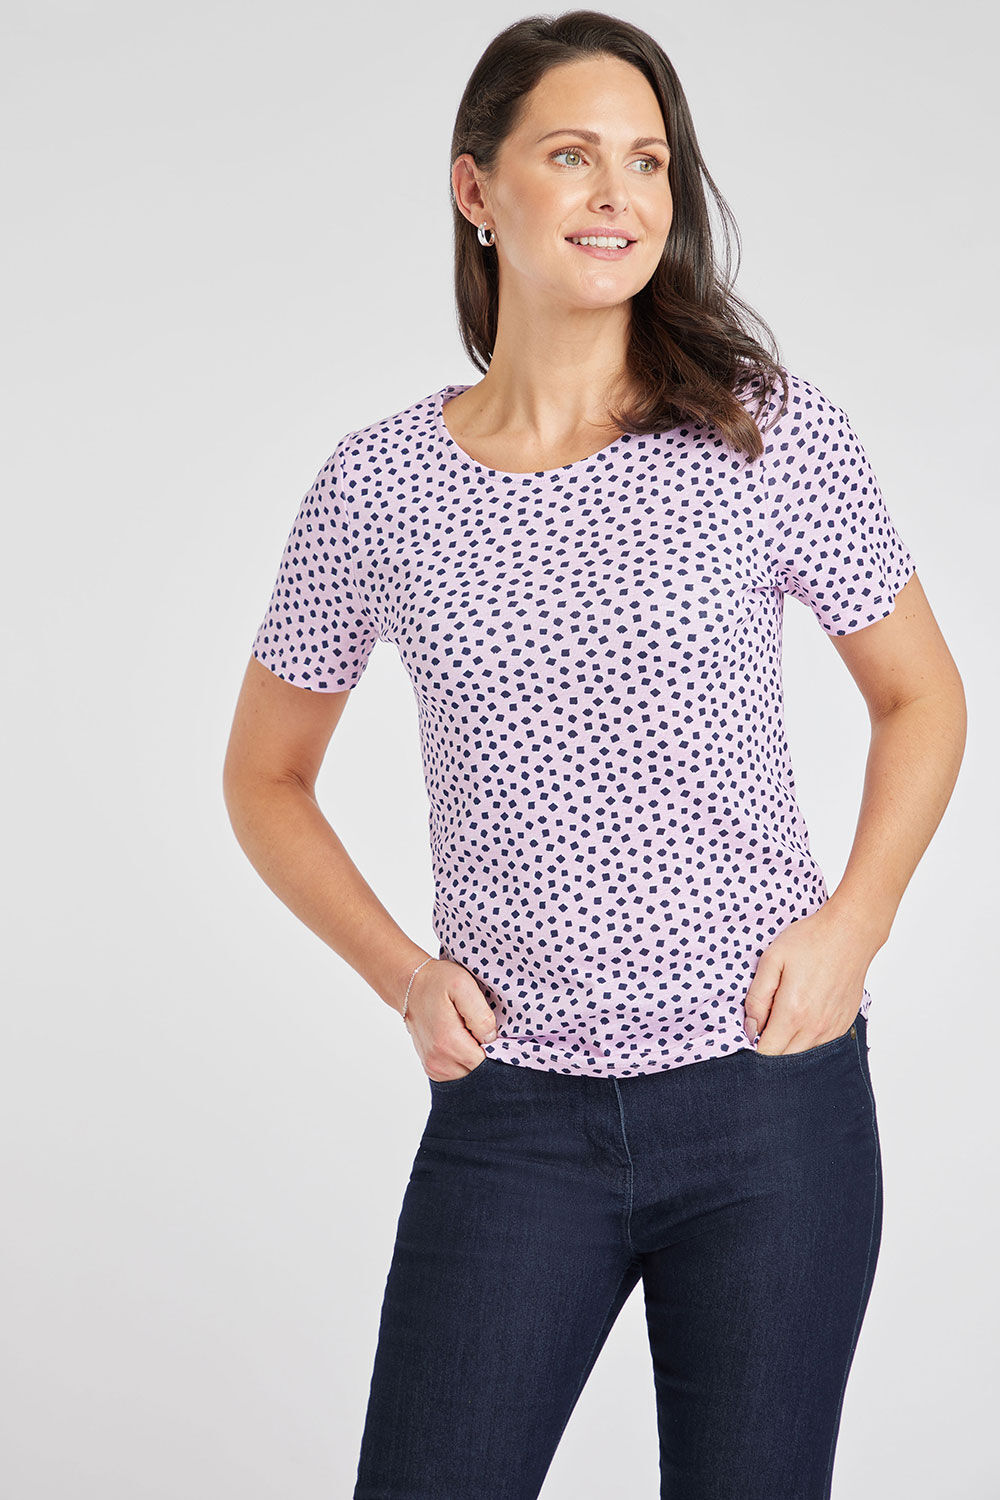 Bonmarche Pink/Navy Short Sleeve Square Dot Print Scoop Neck Top, Size: 16